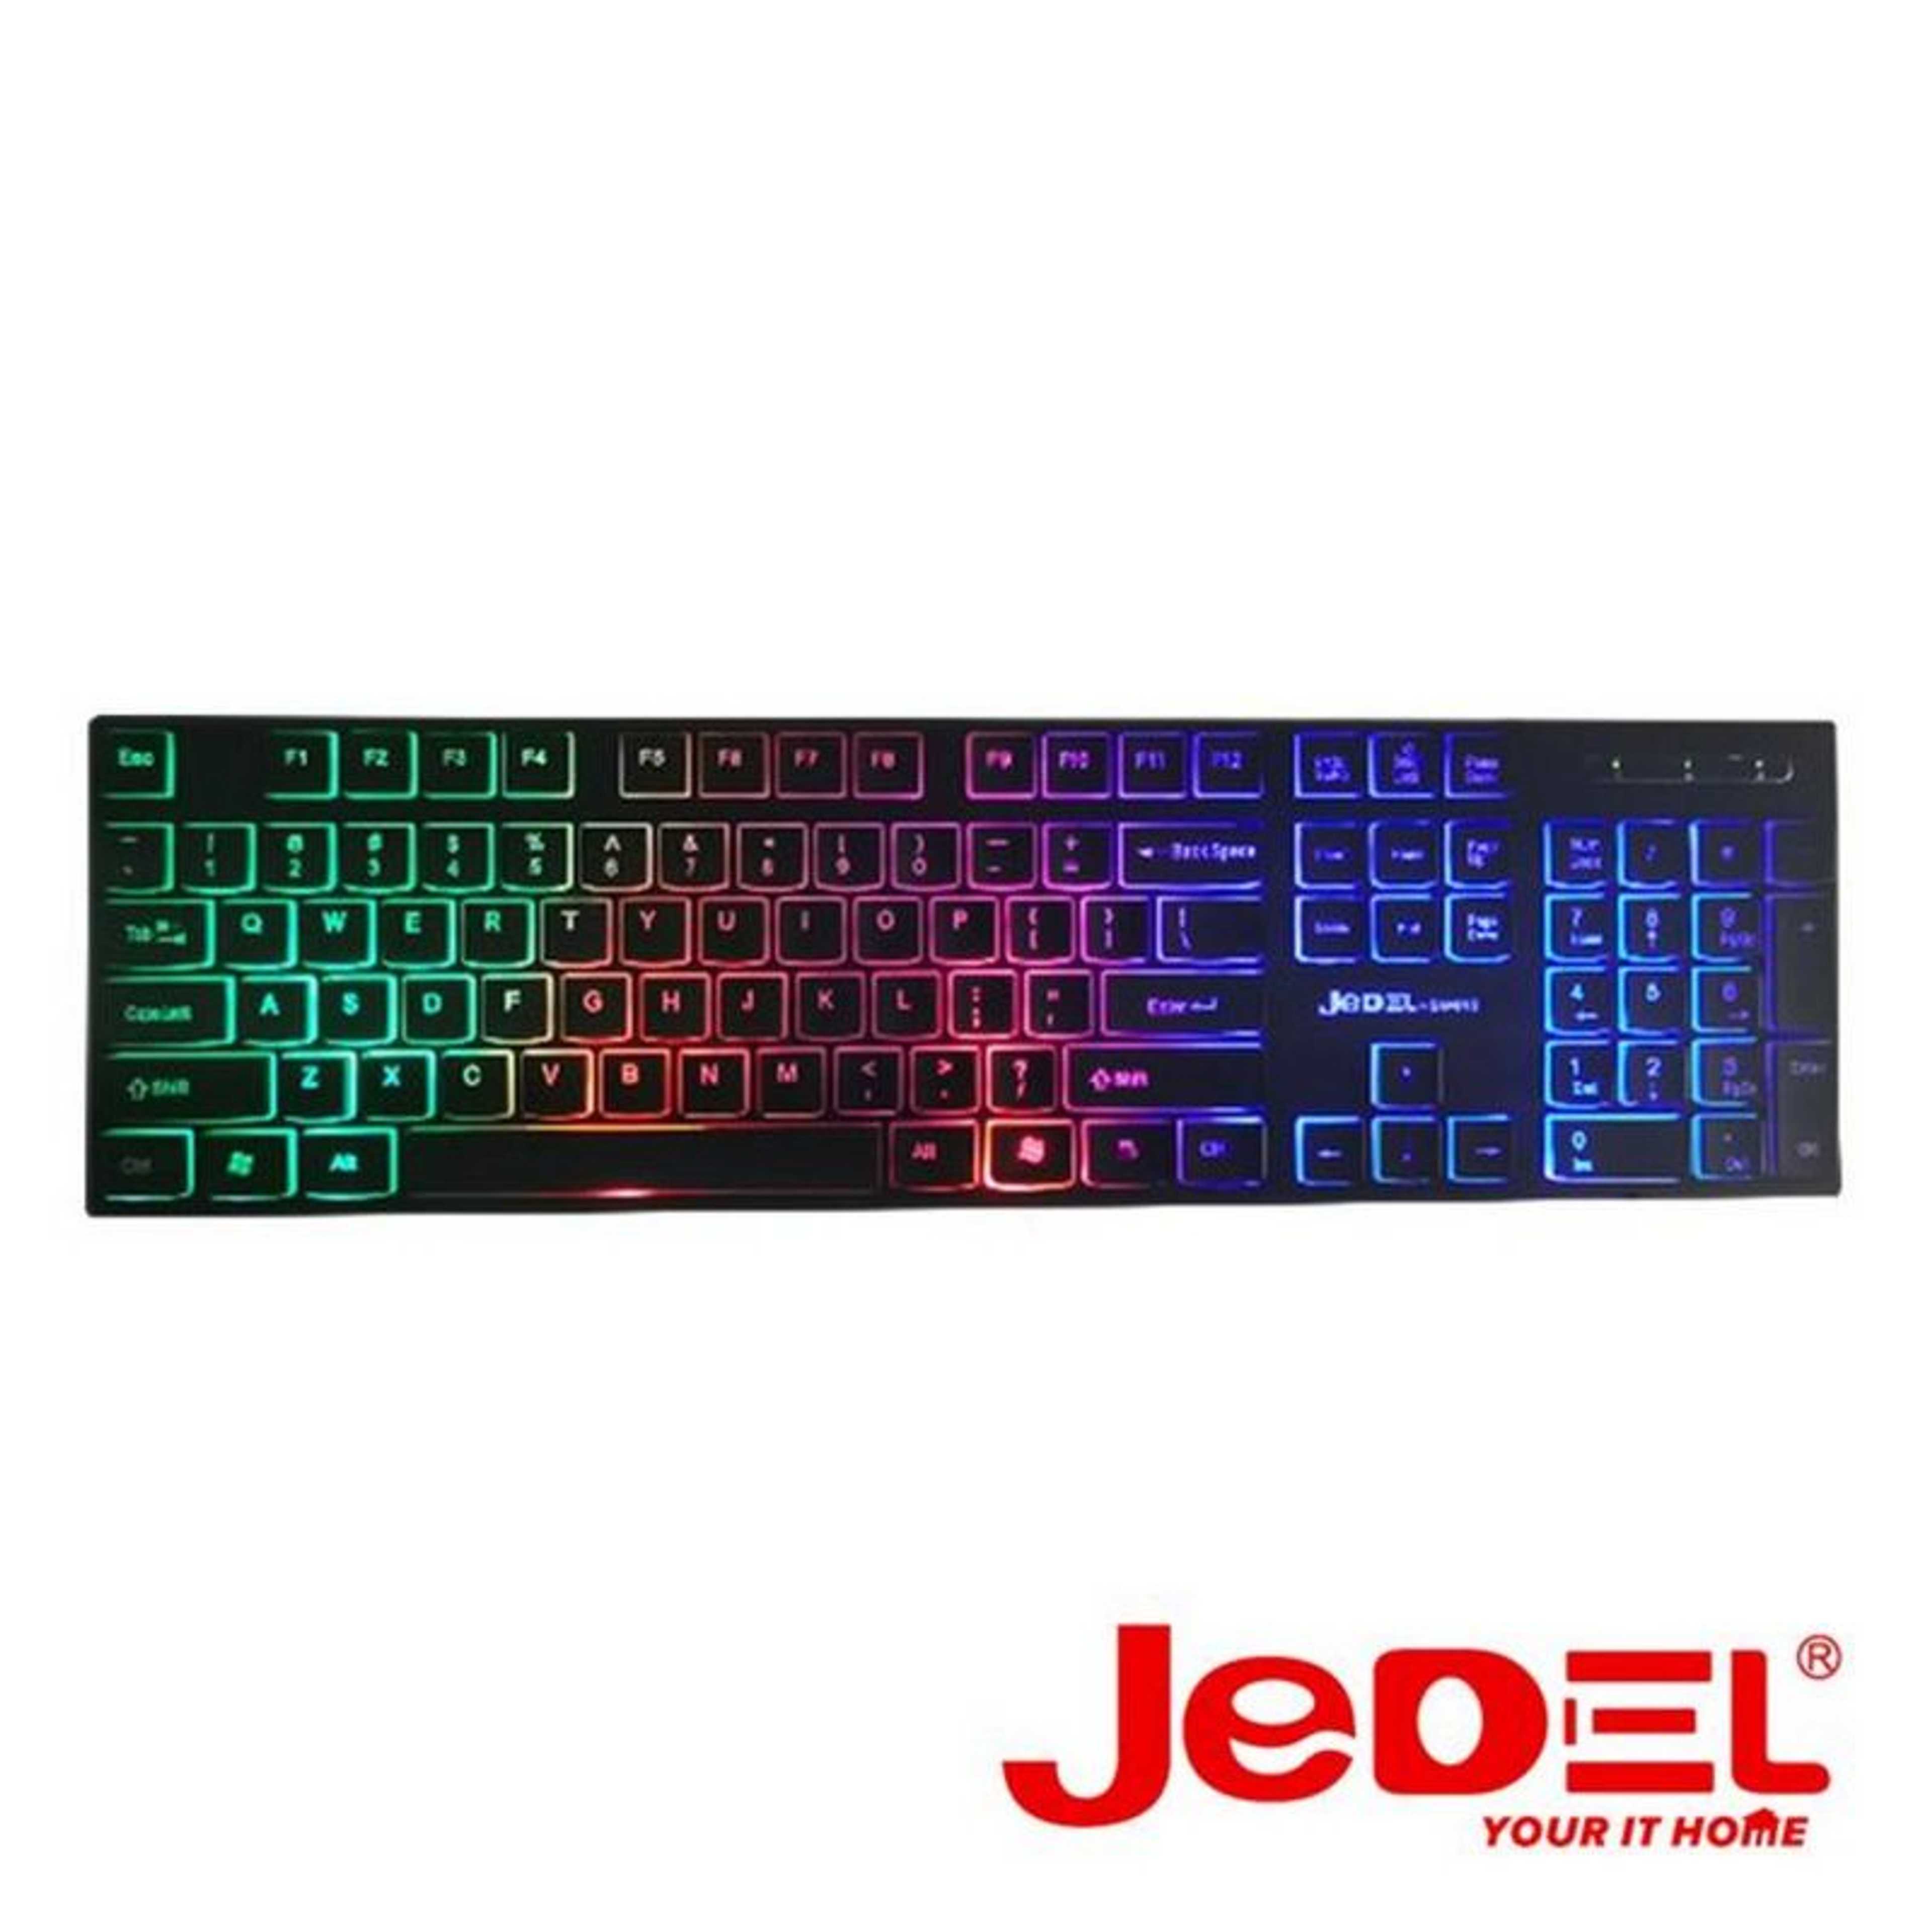 JEDEL K510 Ergonomic Gaming RGB Wired Keyboard